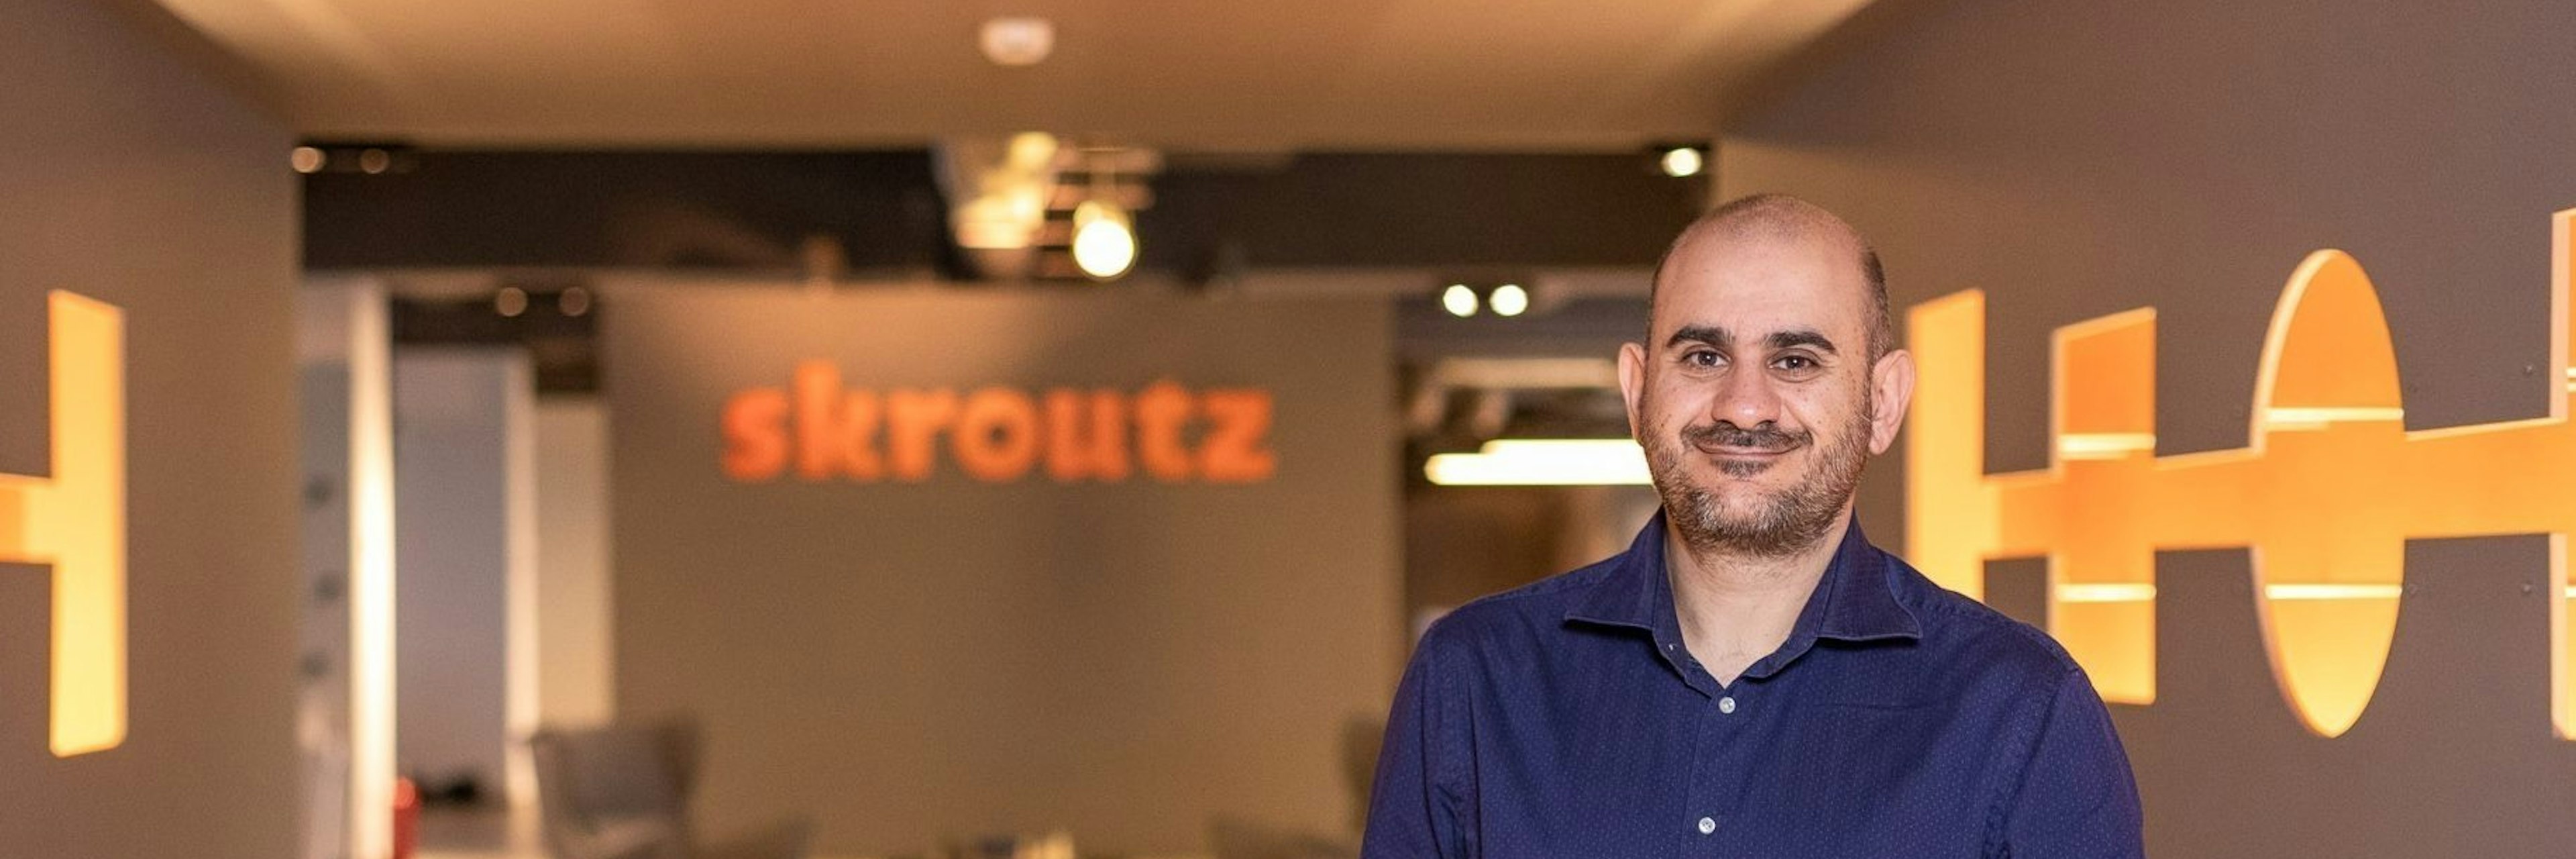 Giorgos Hatzigeorgiou, cofounder and CEO of Greek marketplace startup Skroutz